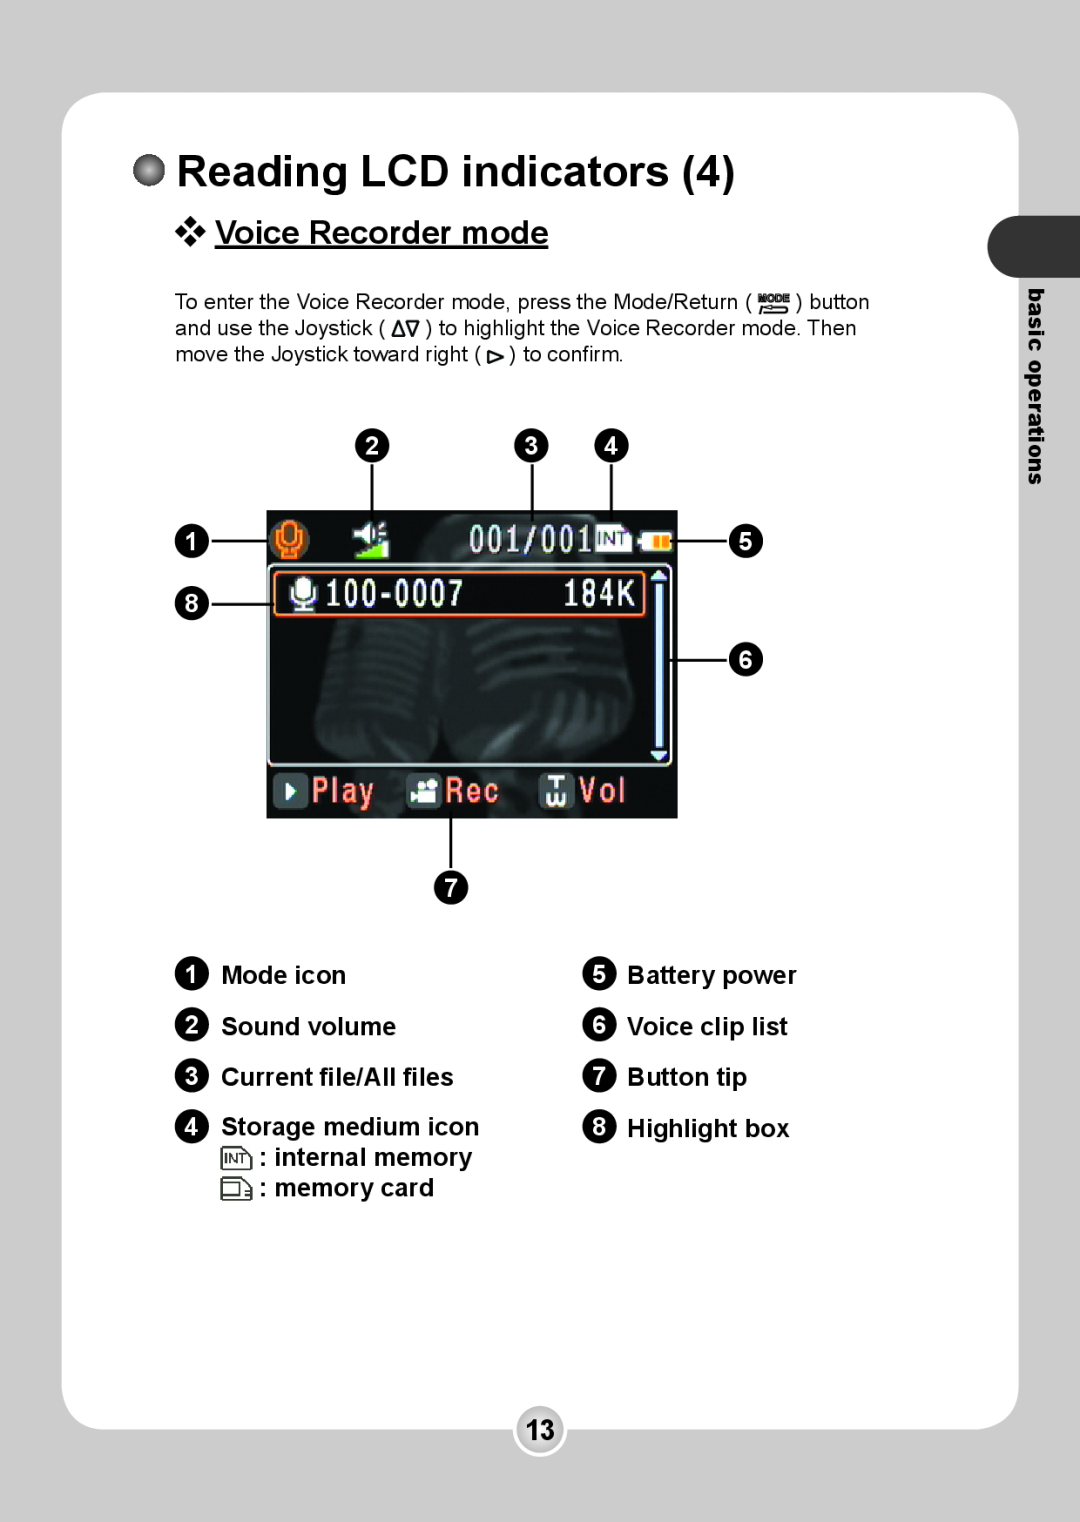 Nokia 6108 Voice Recorder mode, Voice clip list, Storage medium icon, Reading LCD indicators, Mode icon, Sound volume 